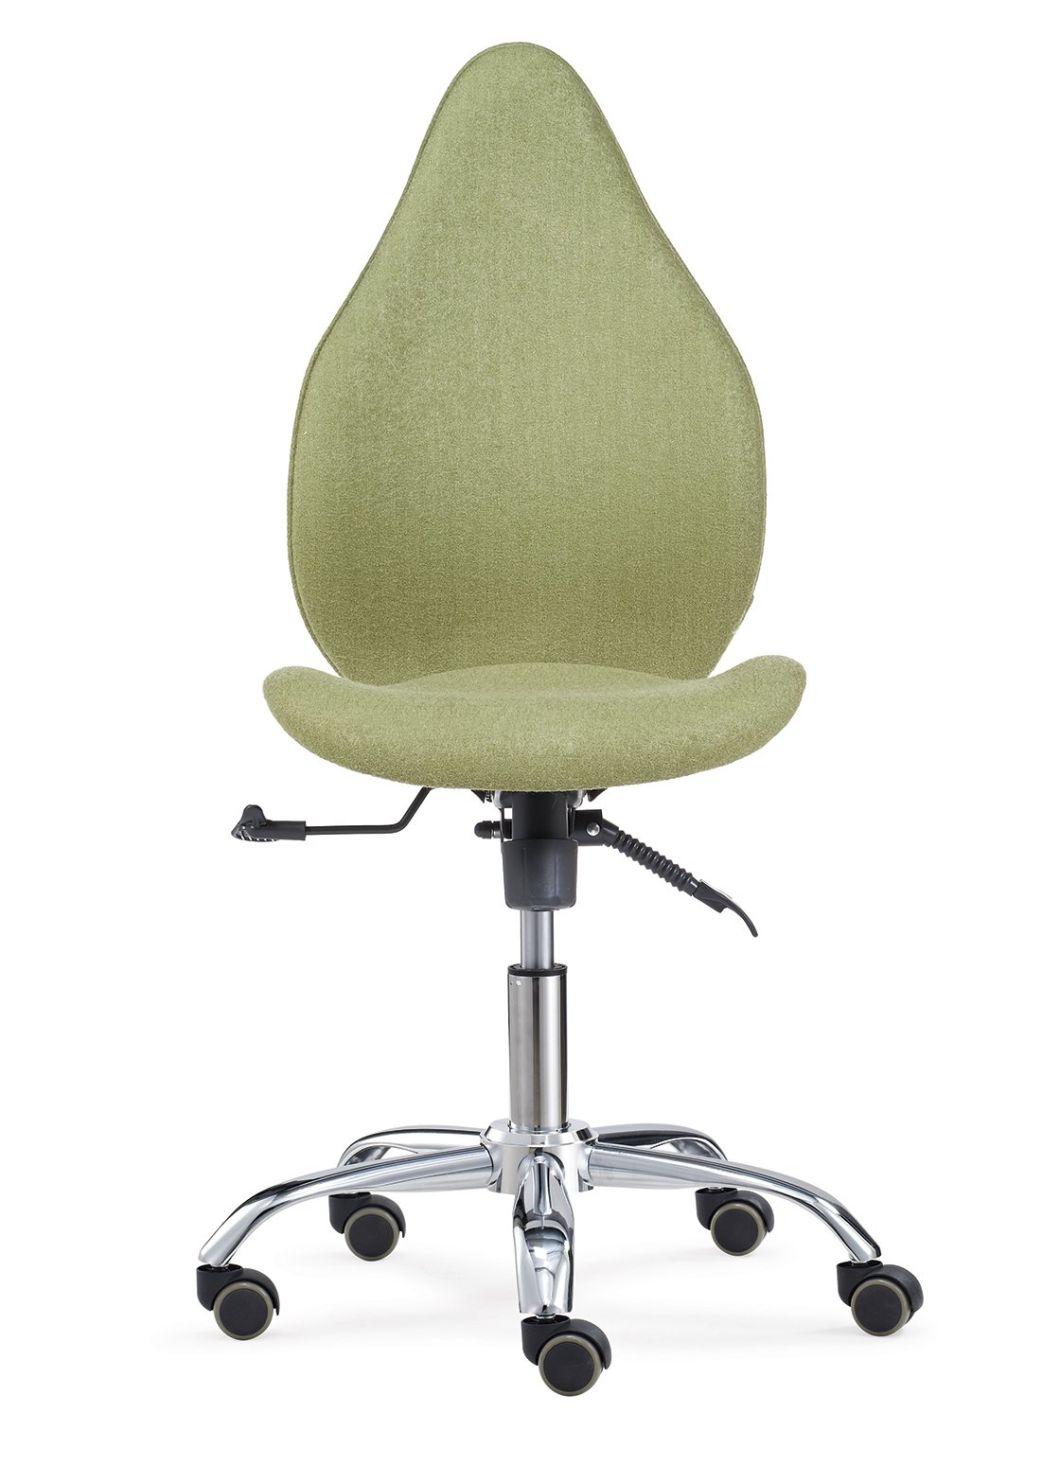 Adjustable Height Ergonomic Office Chair Saddle Stool